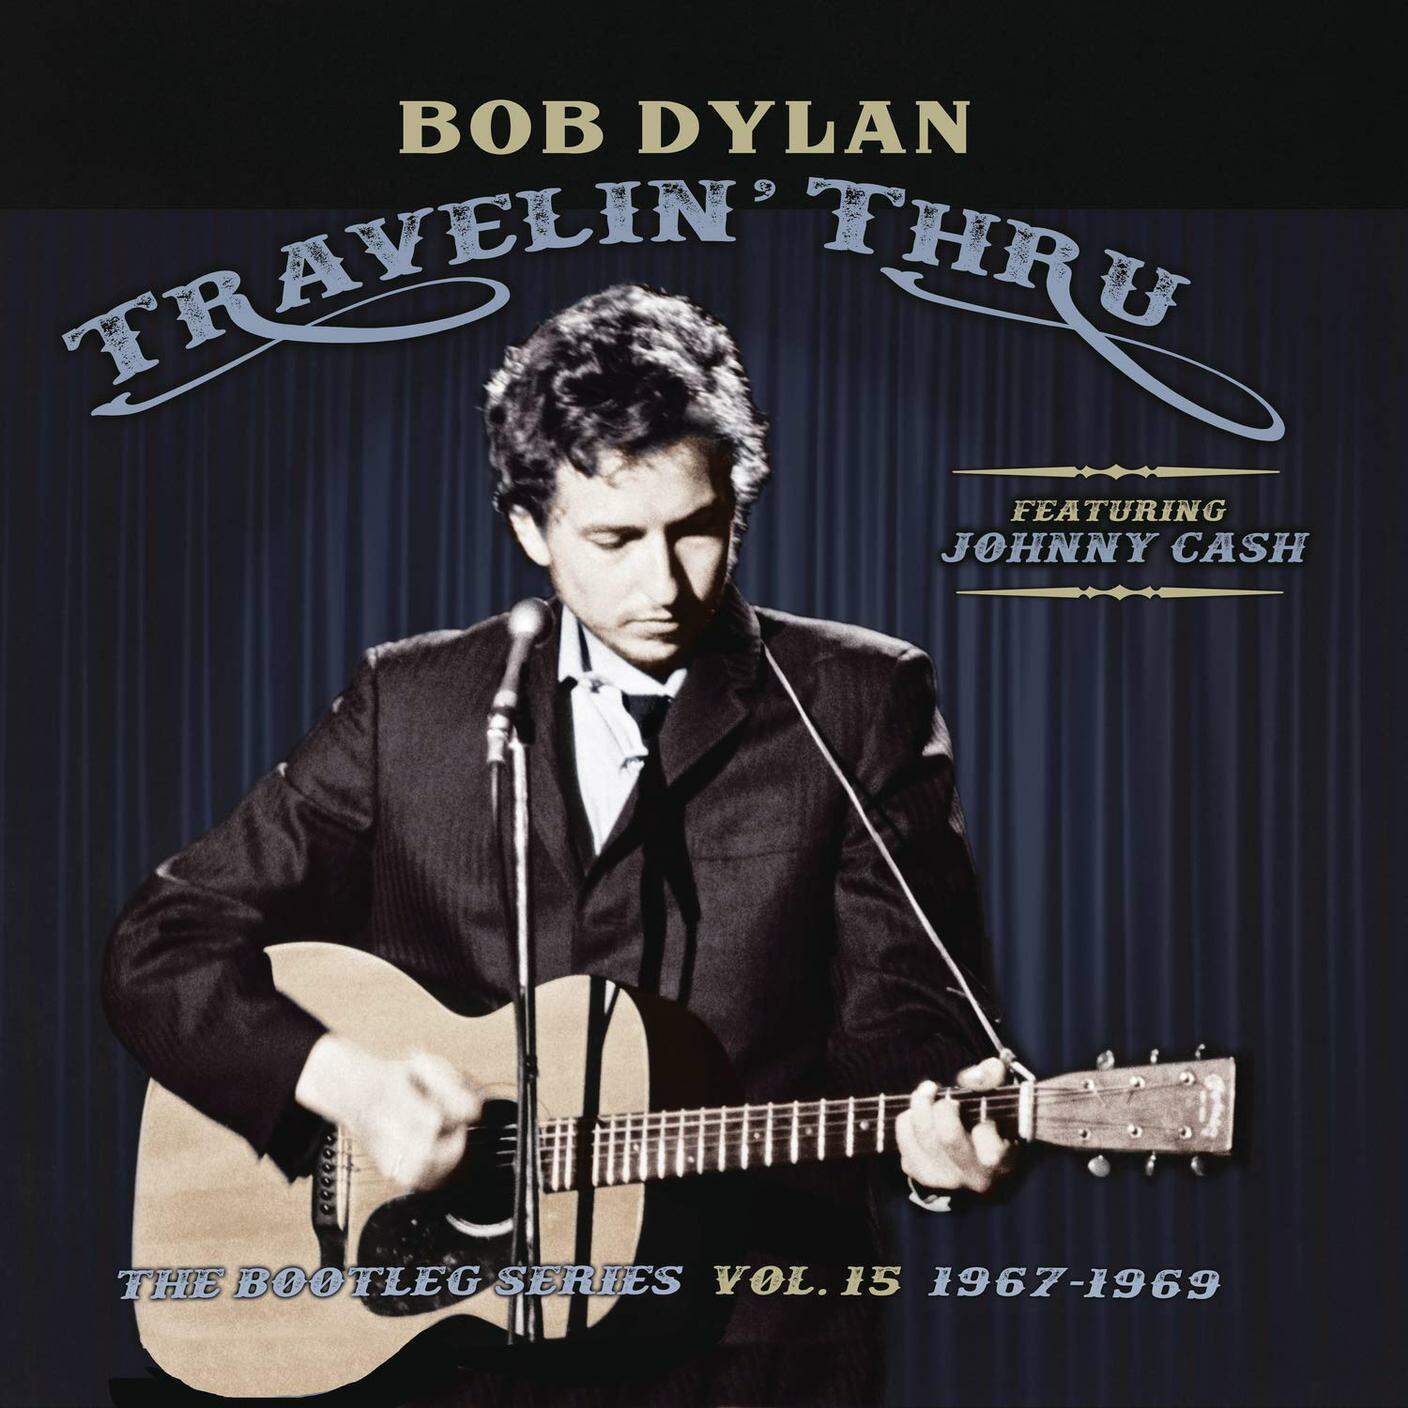 "Travelin' thru" Bob Dylan featuring Johnny Cash, the bootleg series vol.15 1967-1969